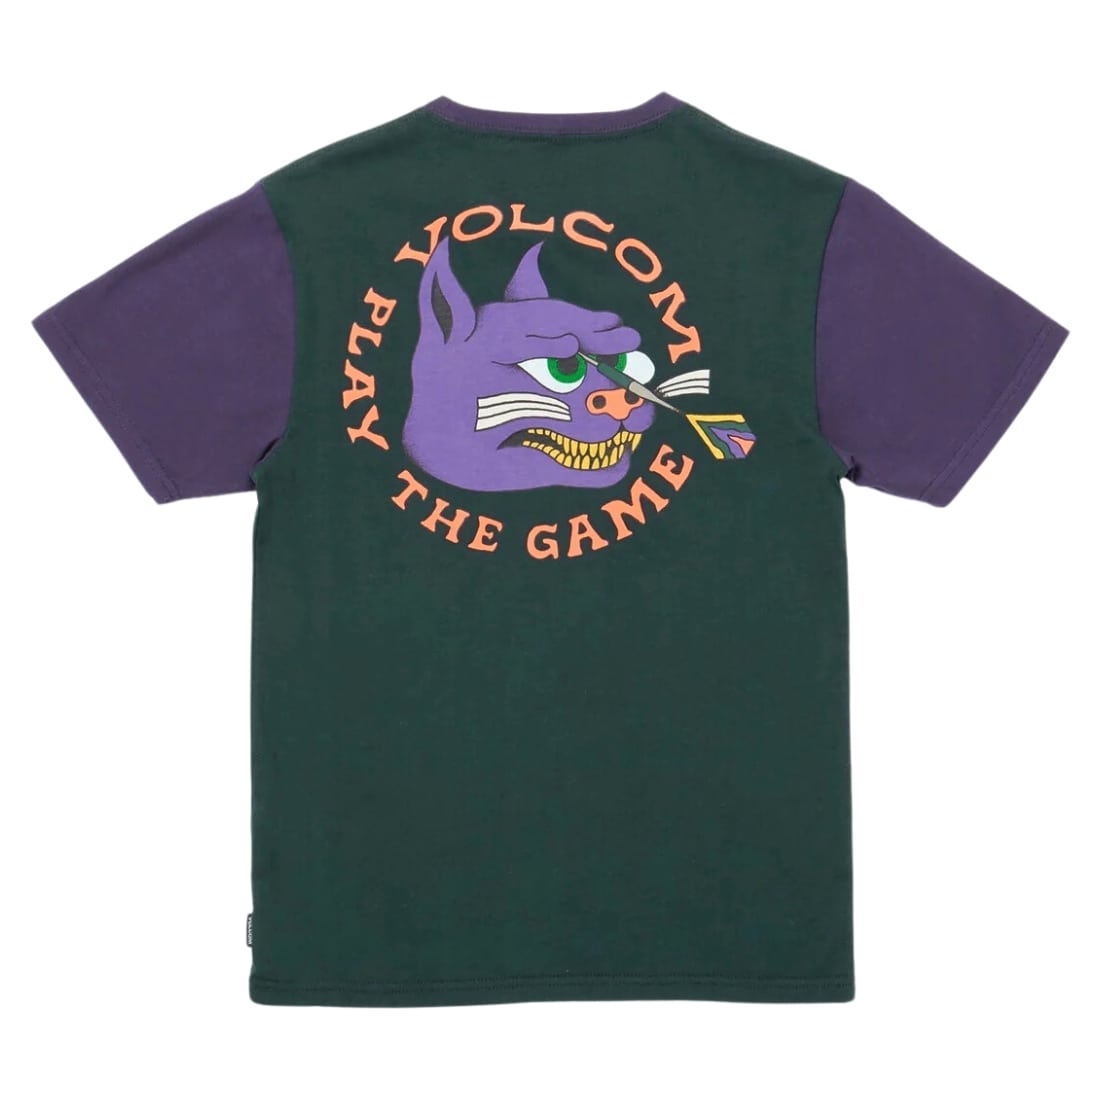 Volcom Kids Fa Nando Von Arb T-Shirt - Ponderosa Pine - Boys Skate Brand T-Shirt by Volcom